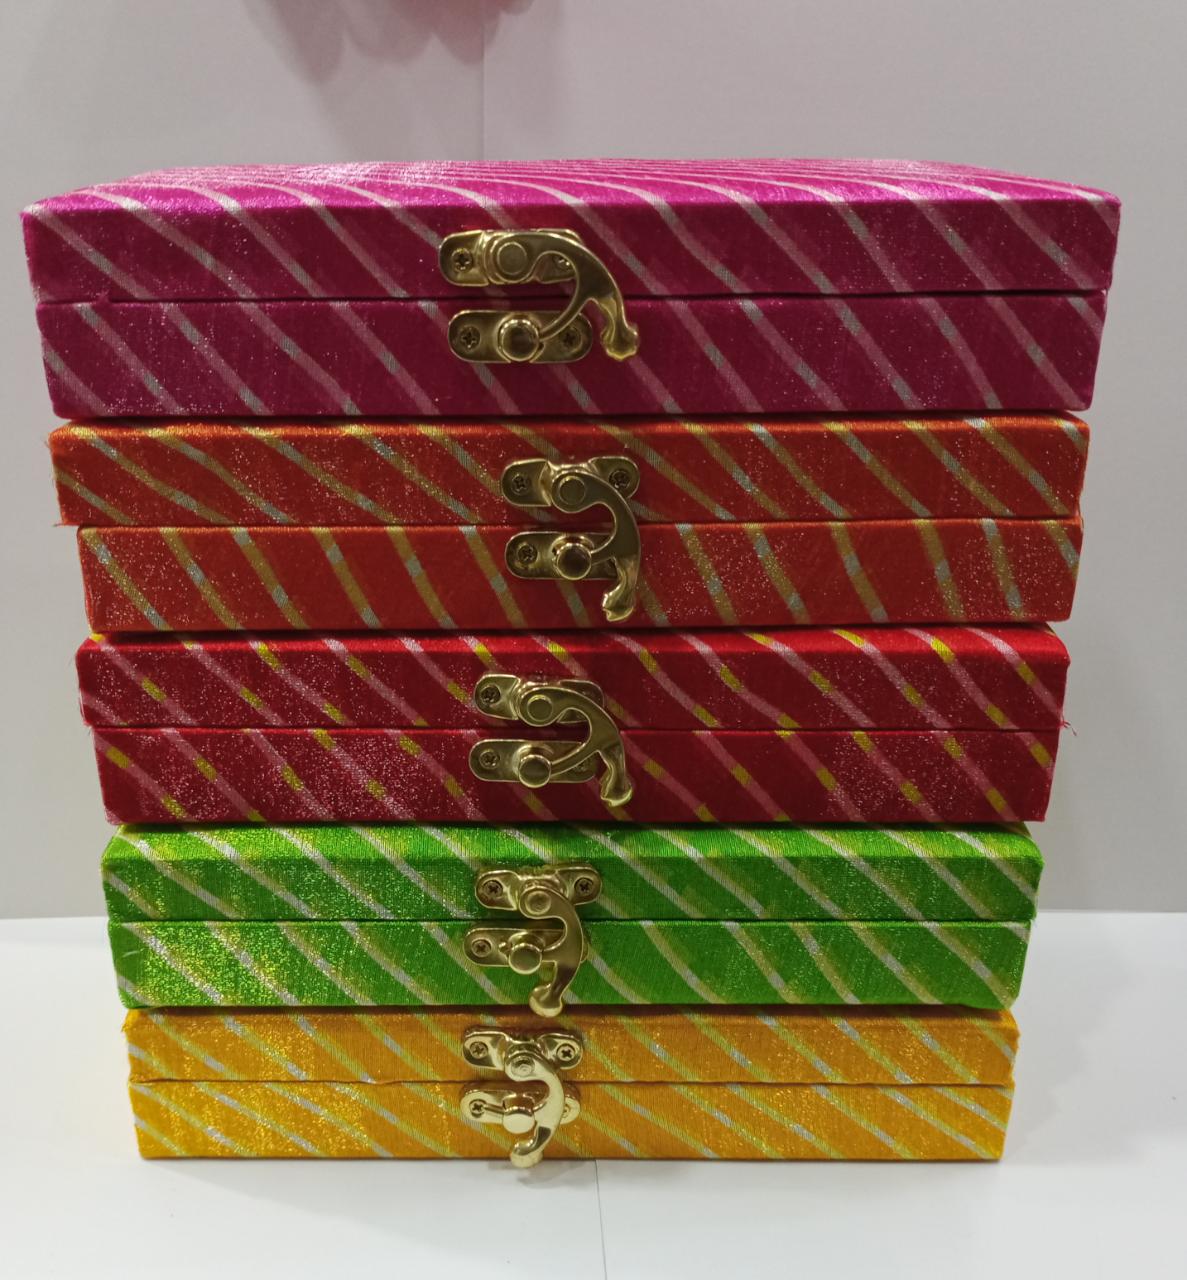 LAMANSH Cash box Assorted colors / Fabric & Wood / 5 LAMANSH® Pack of 5 (4*8 inch) lahariya print Jaipuri Cash Box, Shagun Box, Gift Box, Gaddi Box, Jewellery Box for Wedding Gift / Low cost Return Gifts 🎁 for Guests